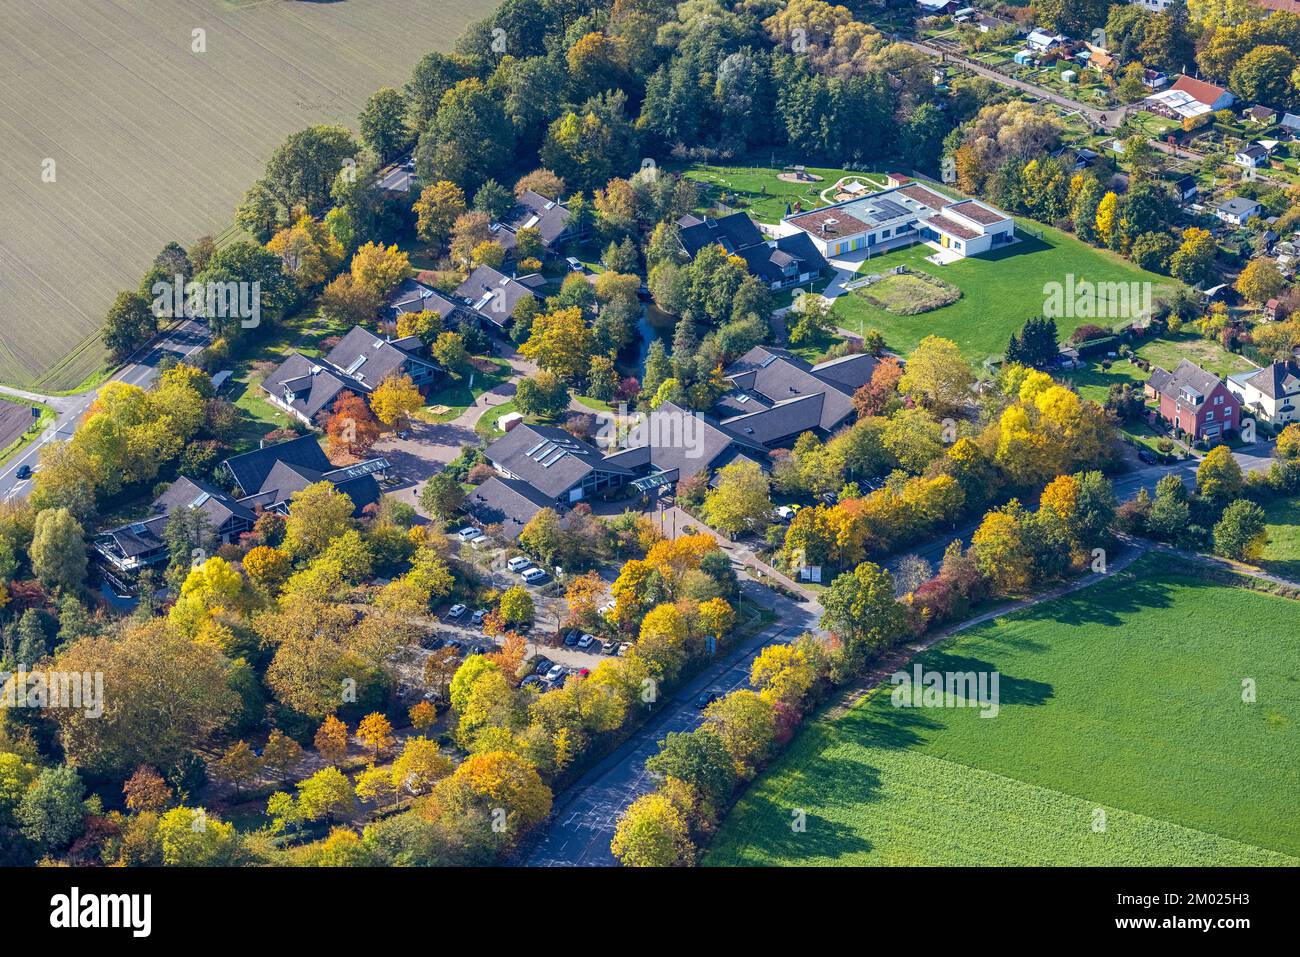 Aerial view, Ahsestrolche sports daycare center, Ahsepark Business Innovation Center, Rhnyern, Hamm, Ruhr area, North Rhine-Westphalia, Germany, Ahse- Stock Photo